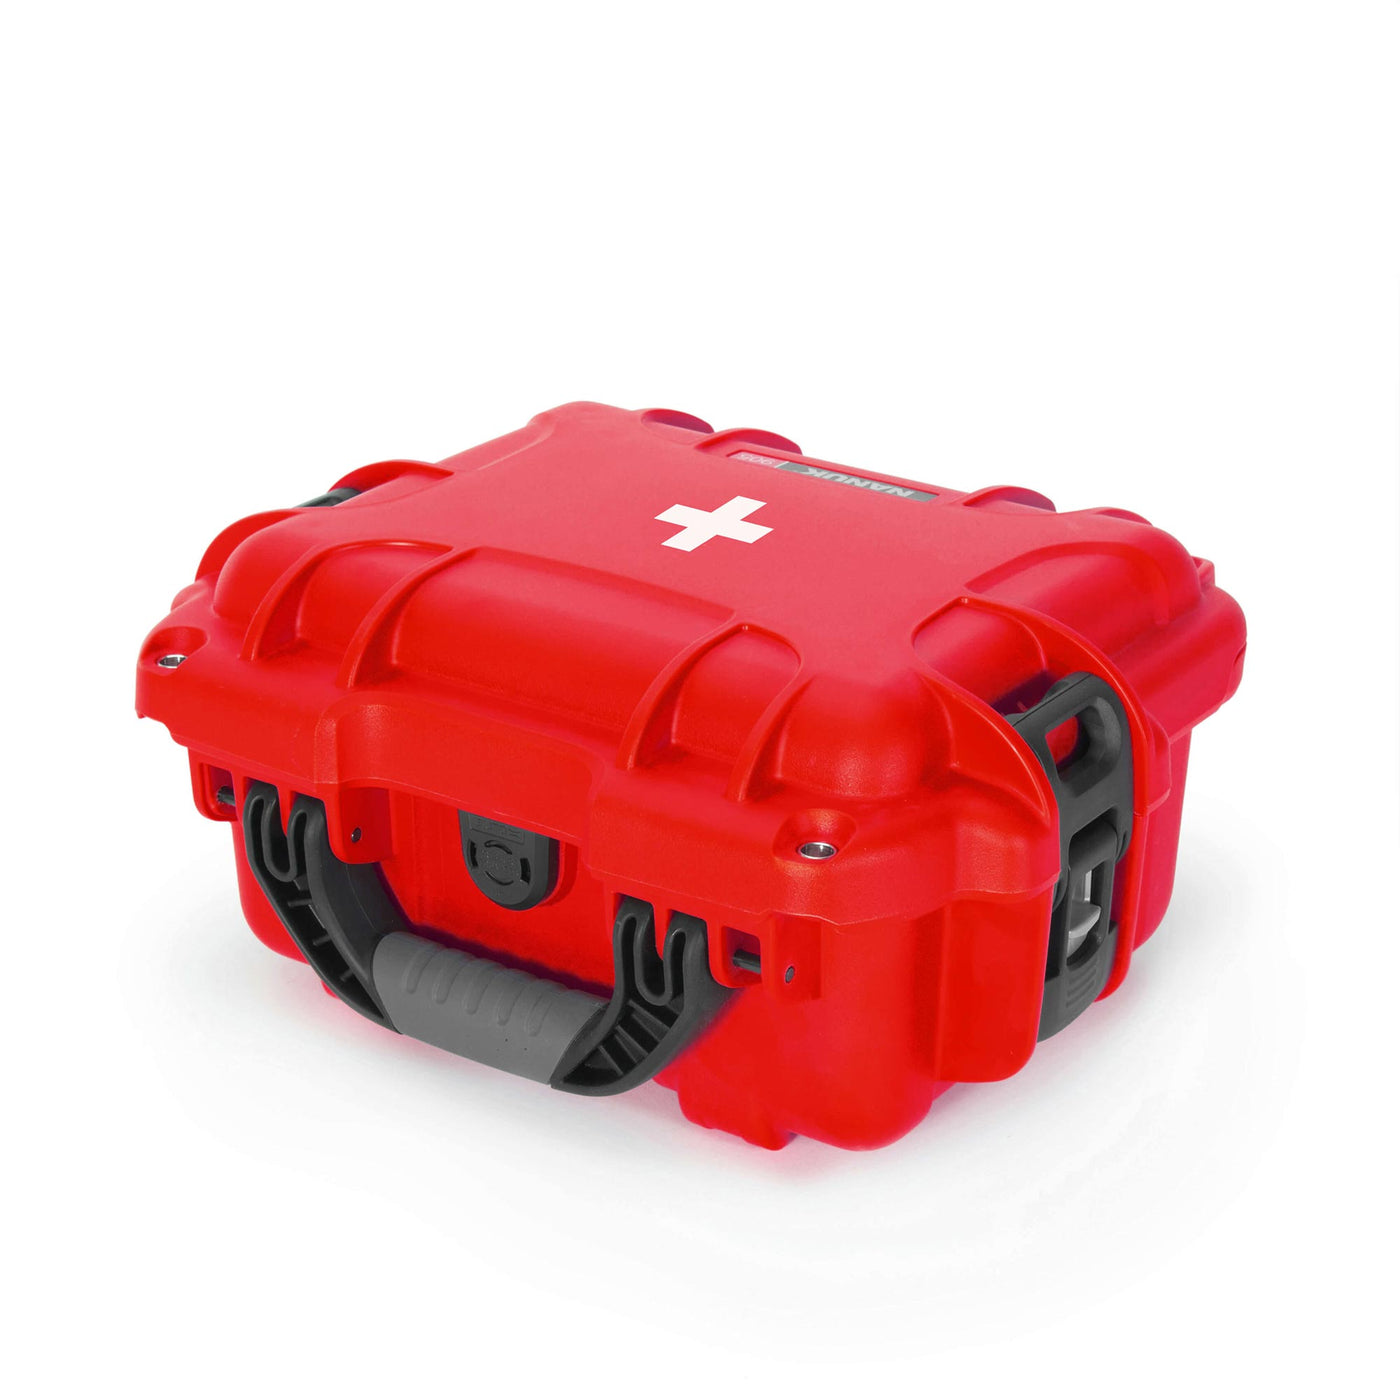 NANUK 905 First Aid case-Outdoor Case-Red-NANUK